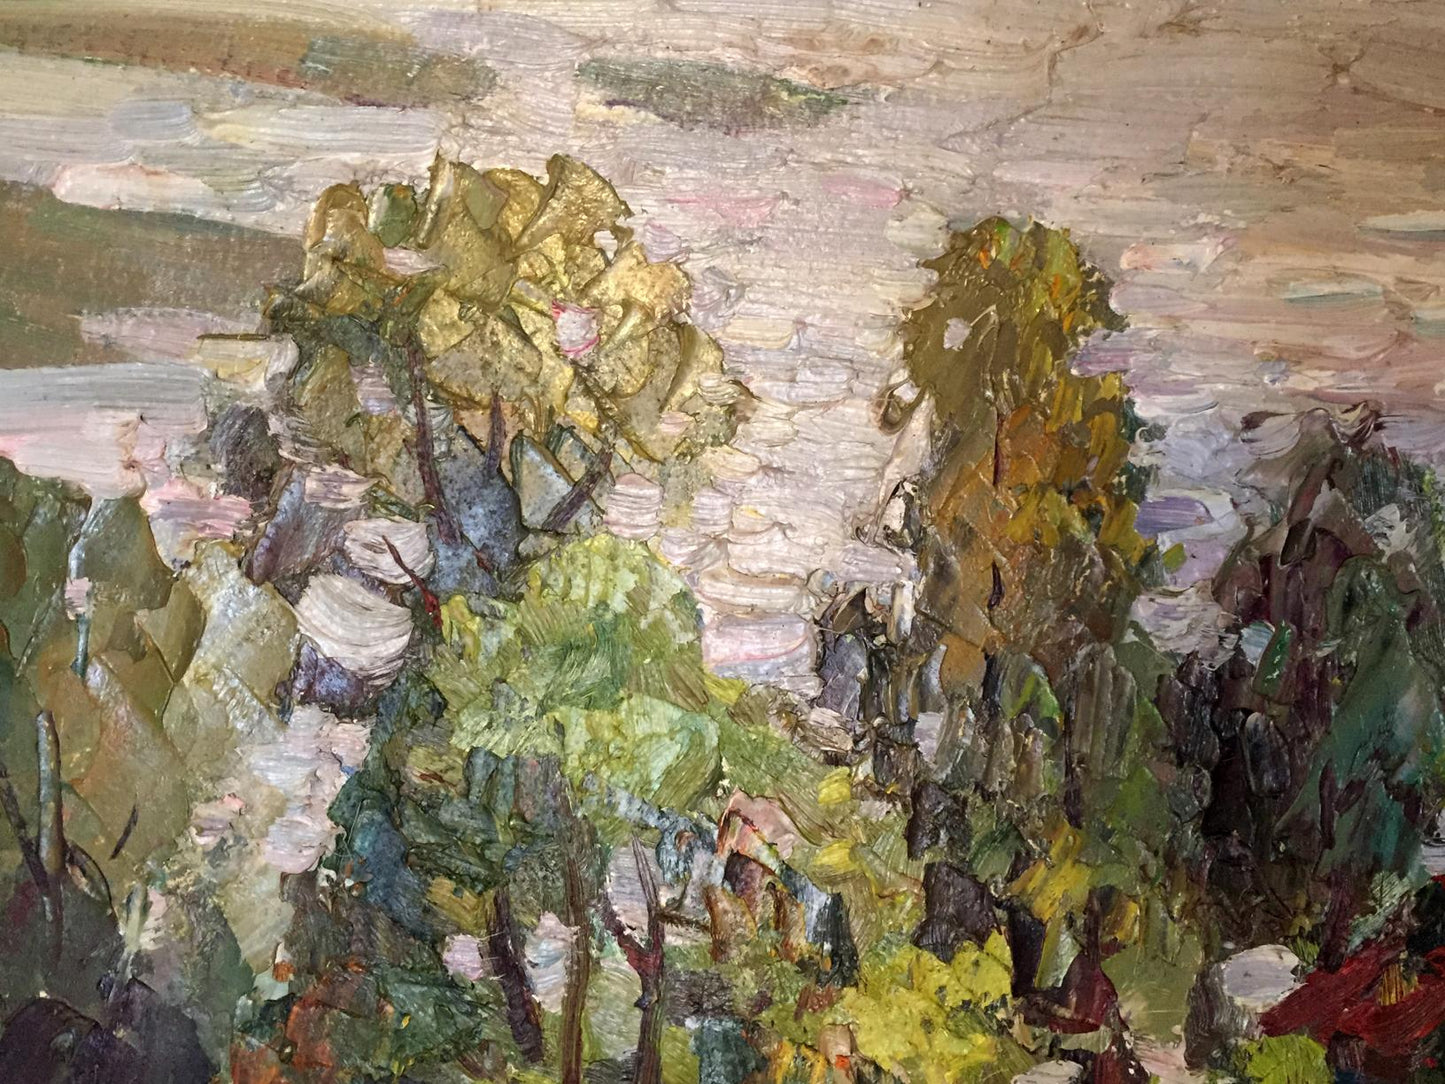 Petr Mikhailovich Kolomoitsev's oil painting of Sednevskaya Grove